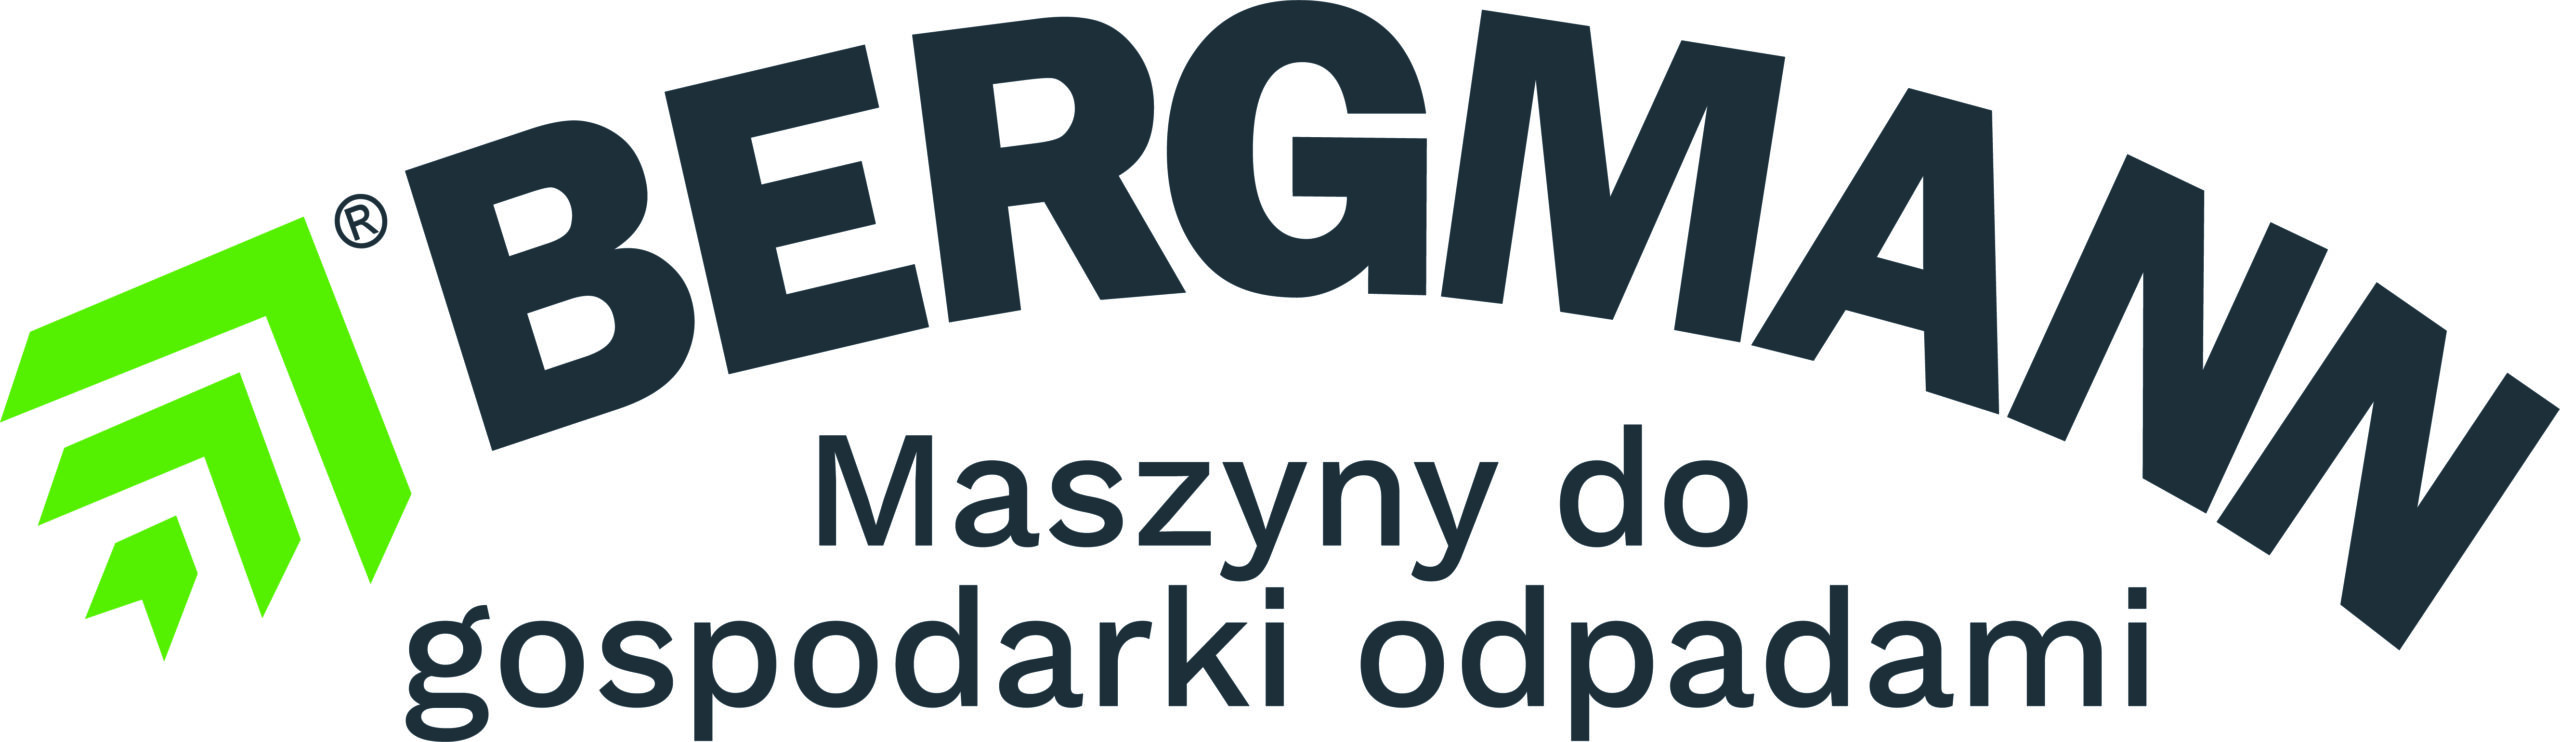 logo-druck-cmyk-1